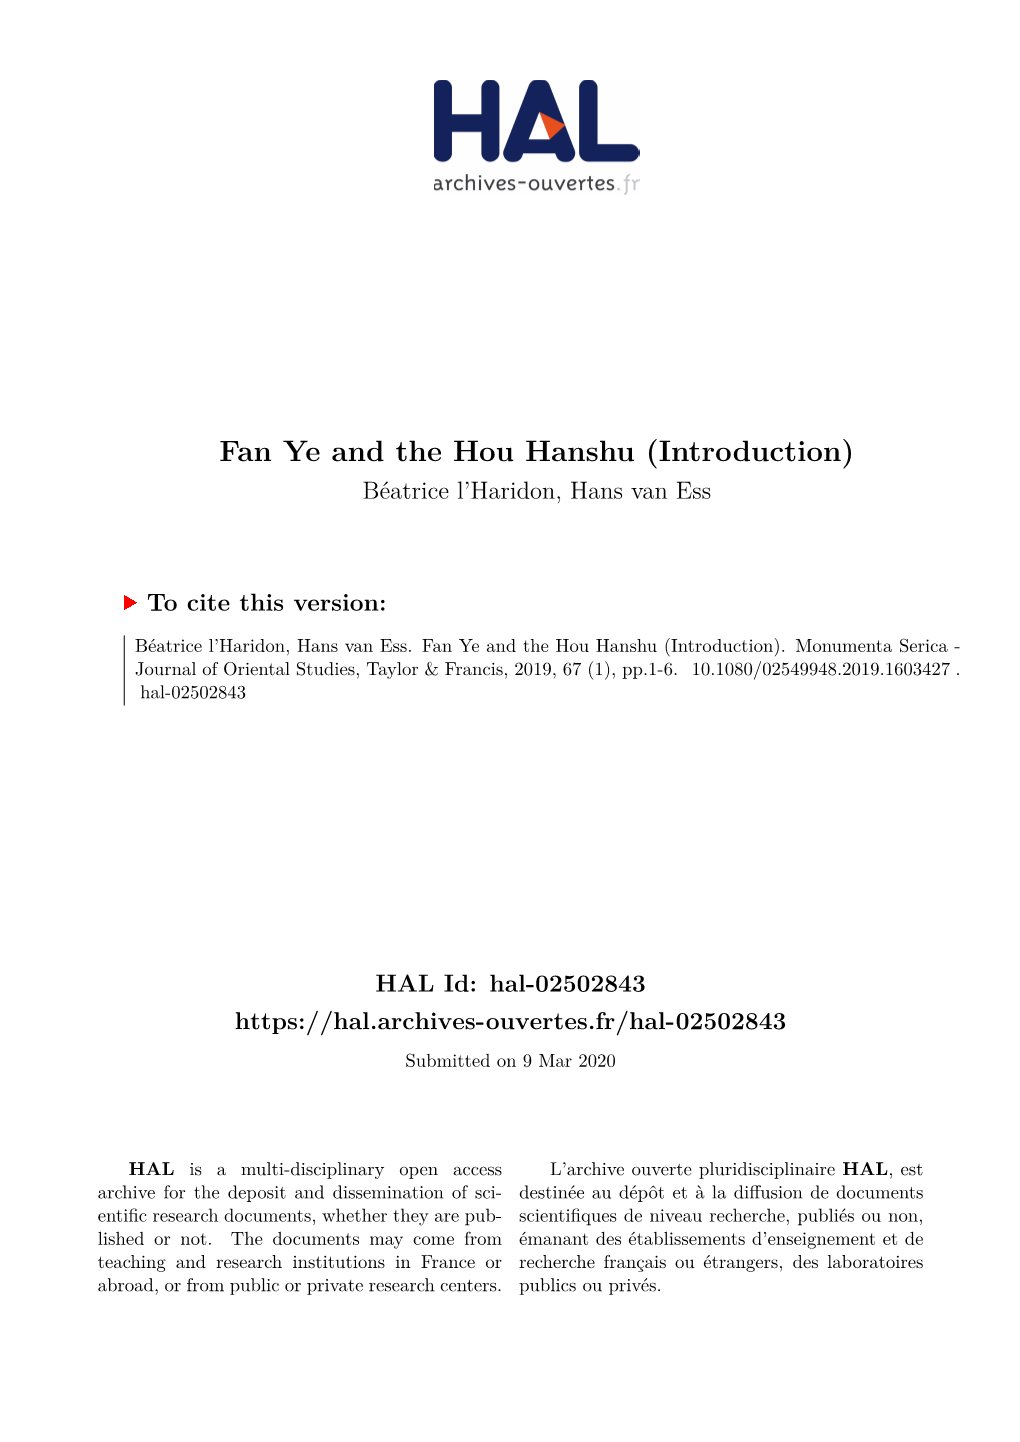 Fan Ye and the Hou Hanshu (Introduction) Béatrice L’Haridon, Hans Van Ess